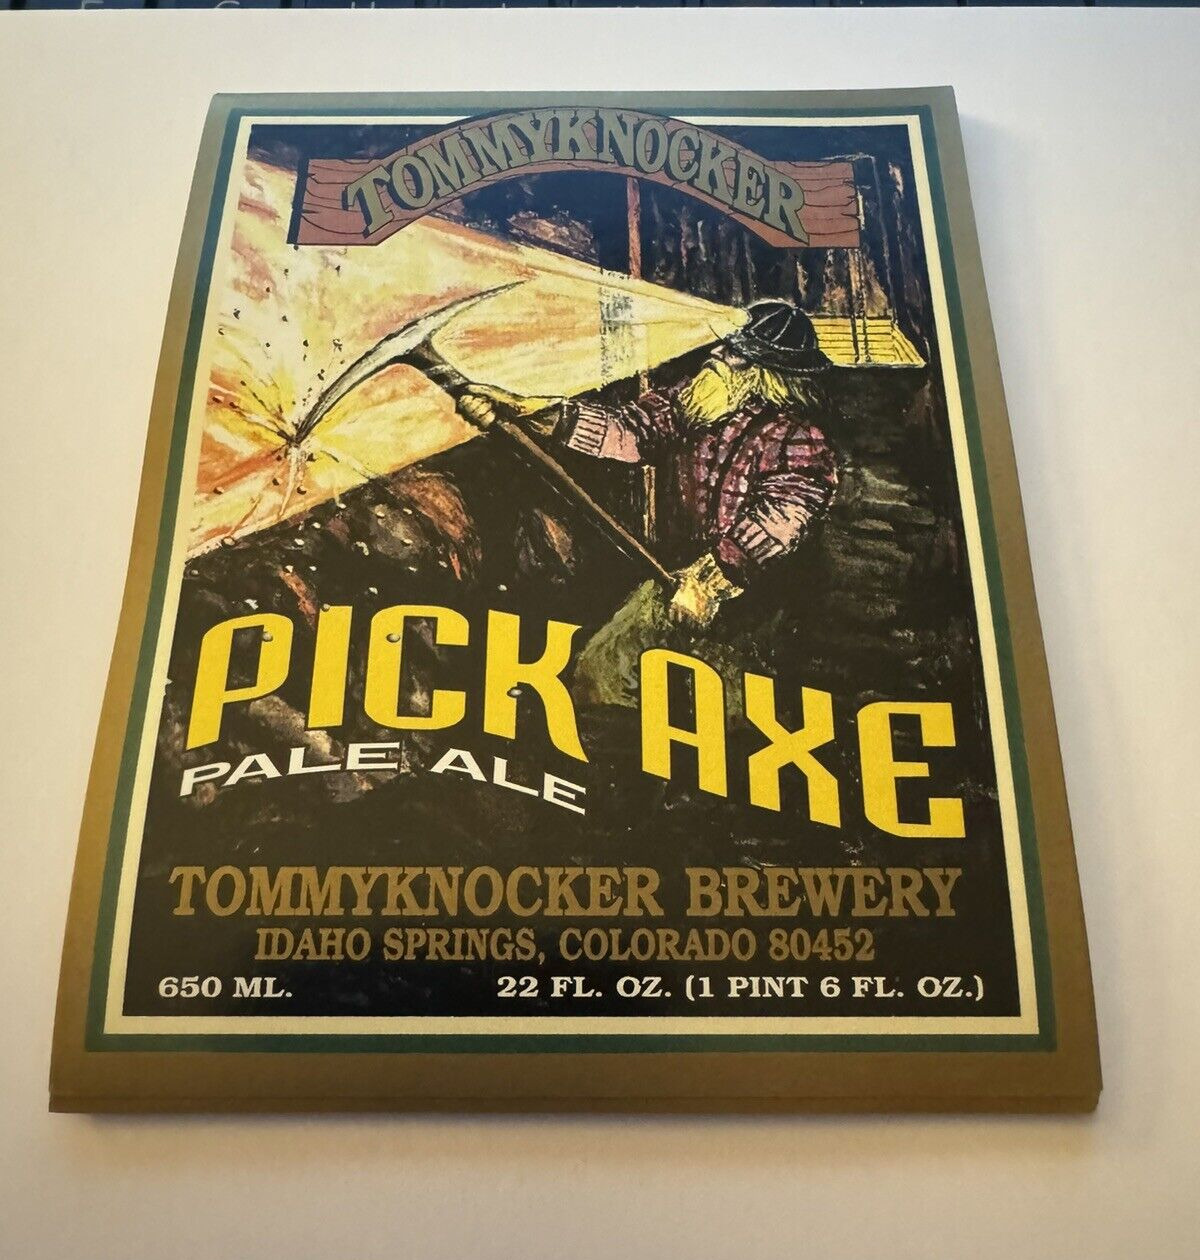 25 Tommyknocker Brewing  Pick Axe Pale Ale Beer Labels Idaho Springs, Colorado